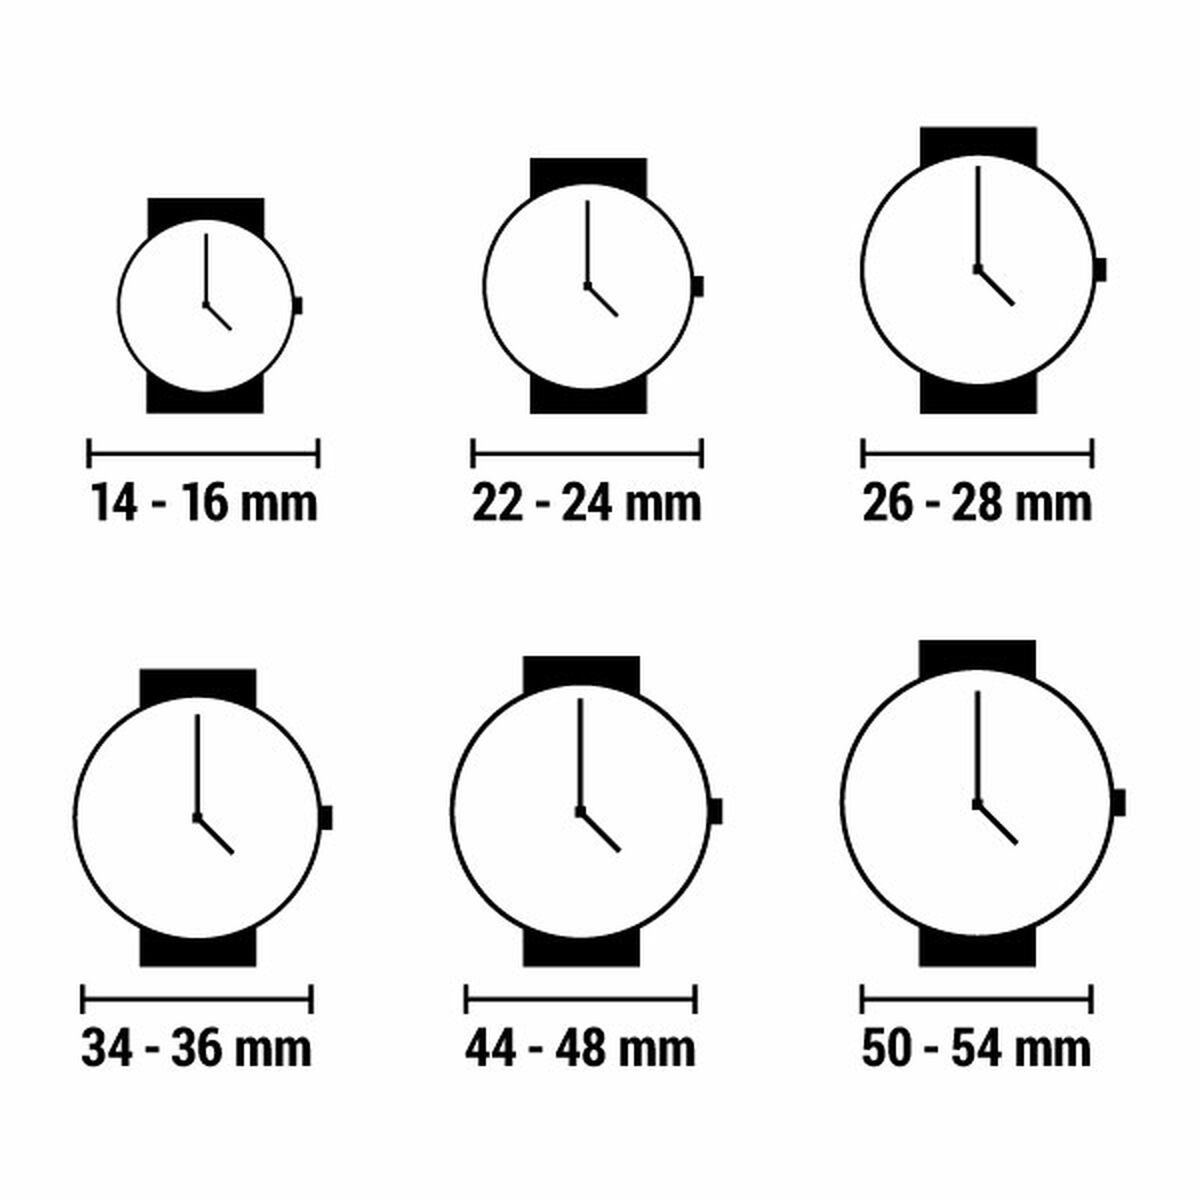 Horloge Dames Calvin Klein 25200238